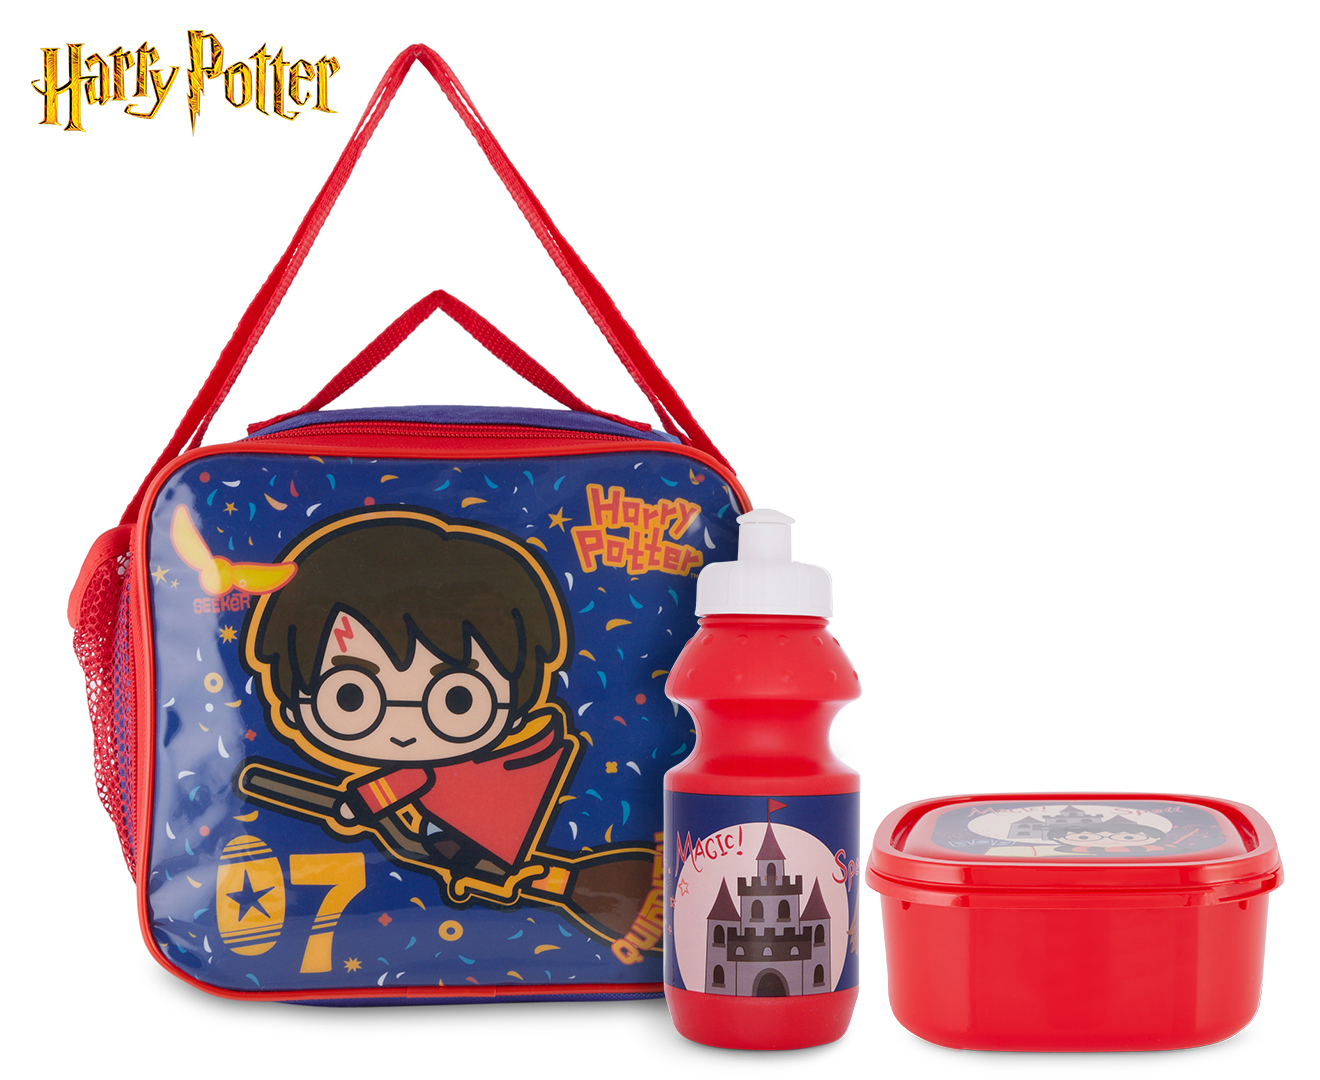 Harry Potter 3-Piece Lunch Bag Set - Red/Blue